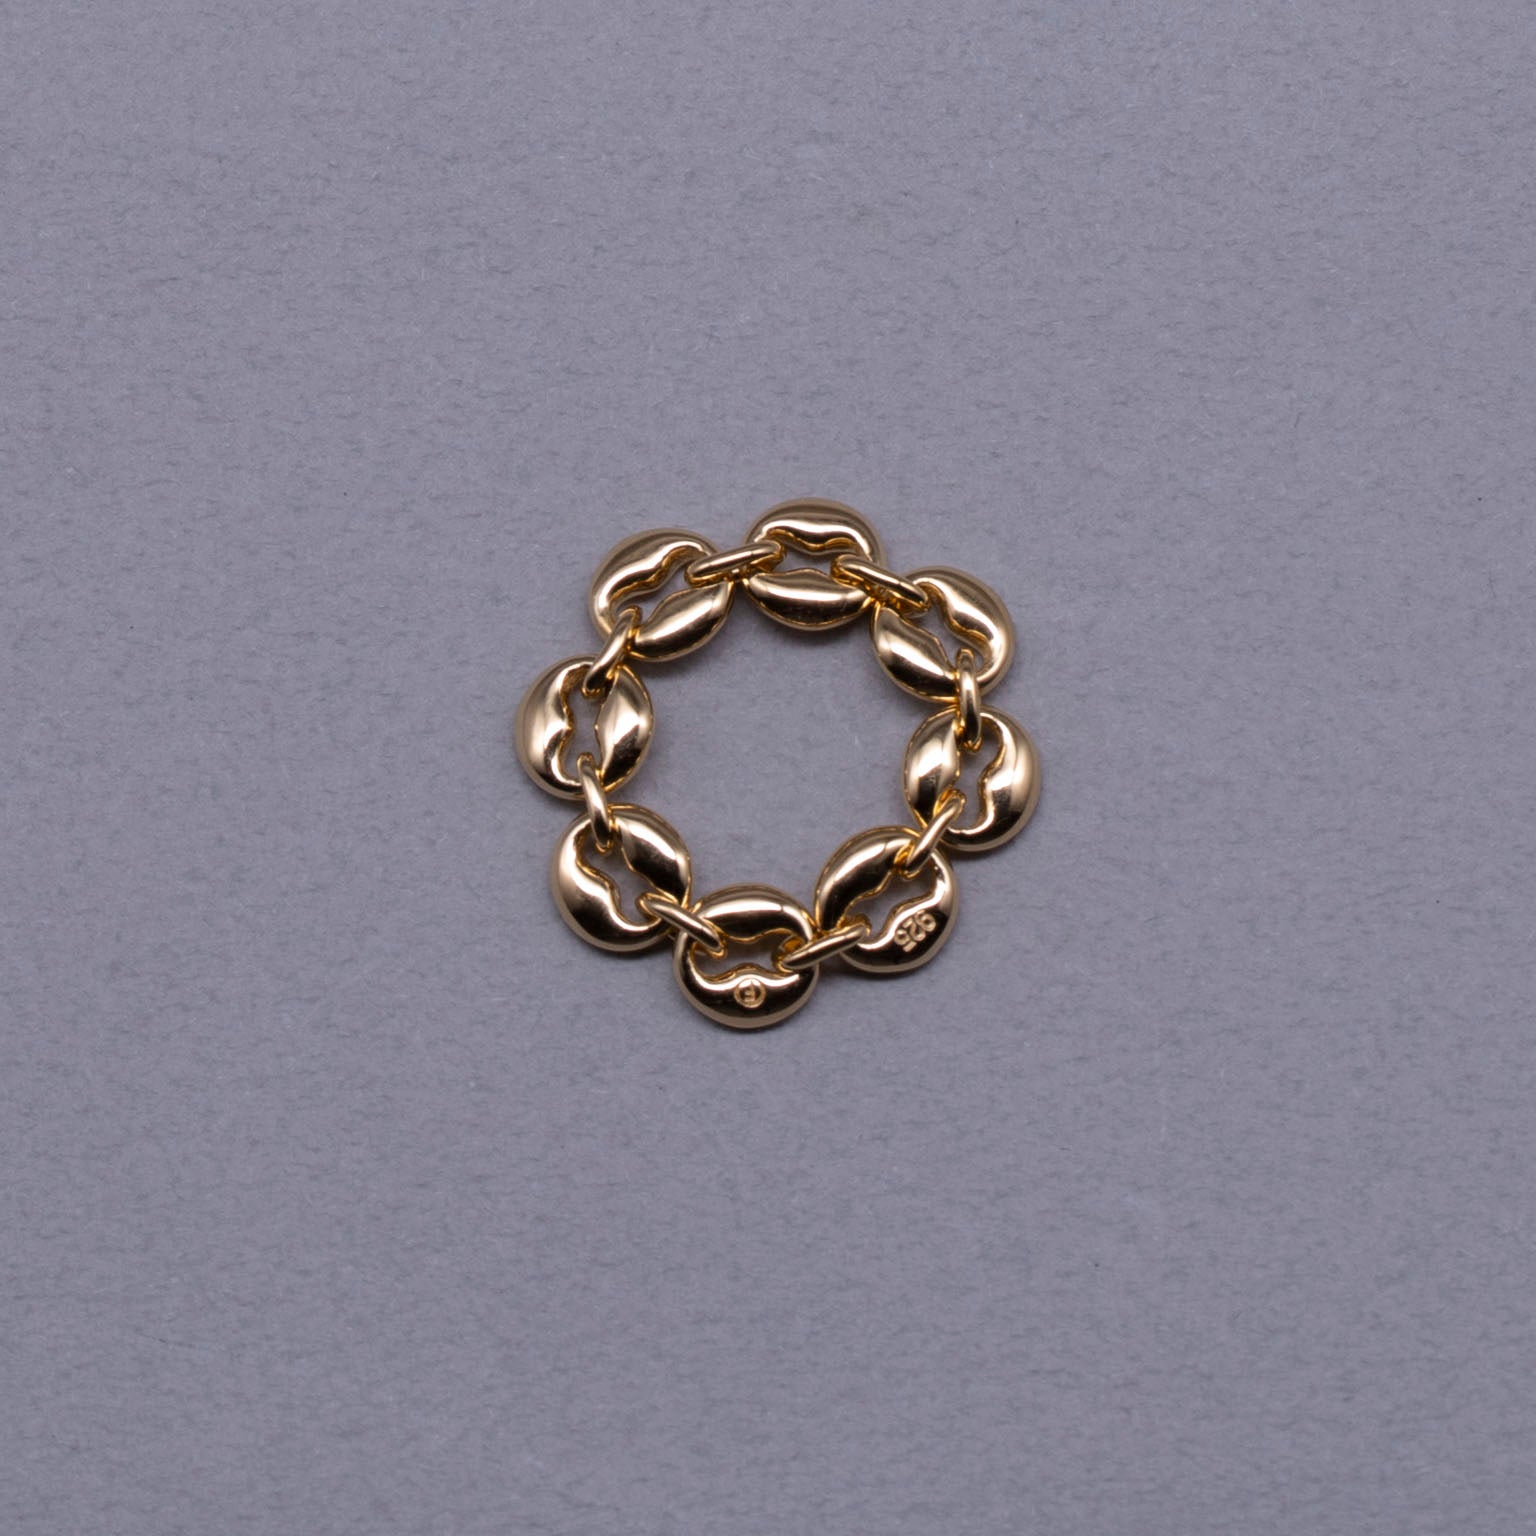 8hole ring Medium Gold